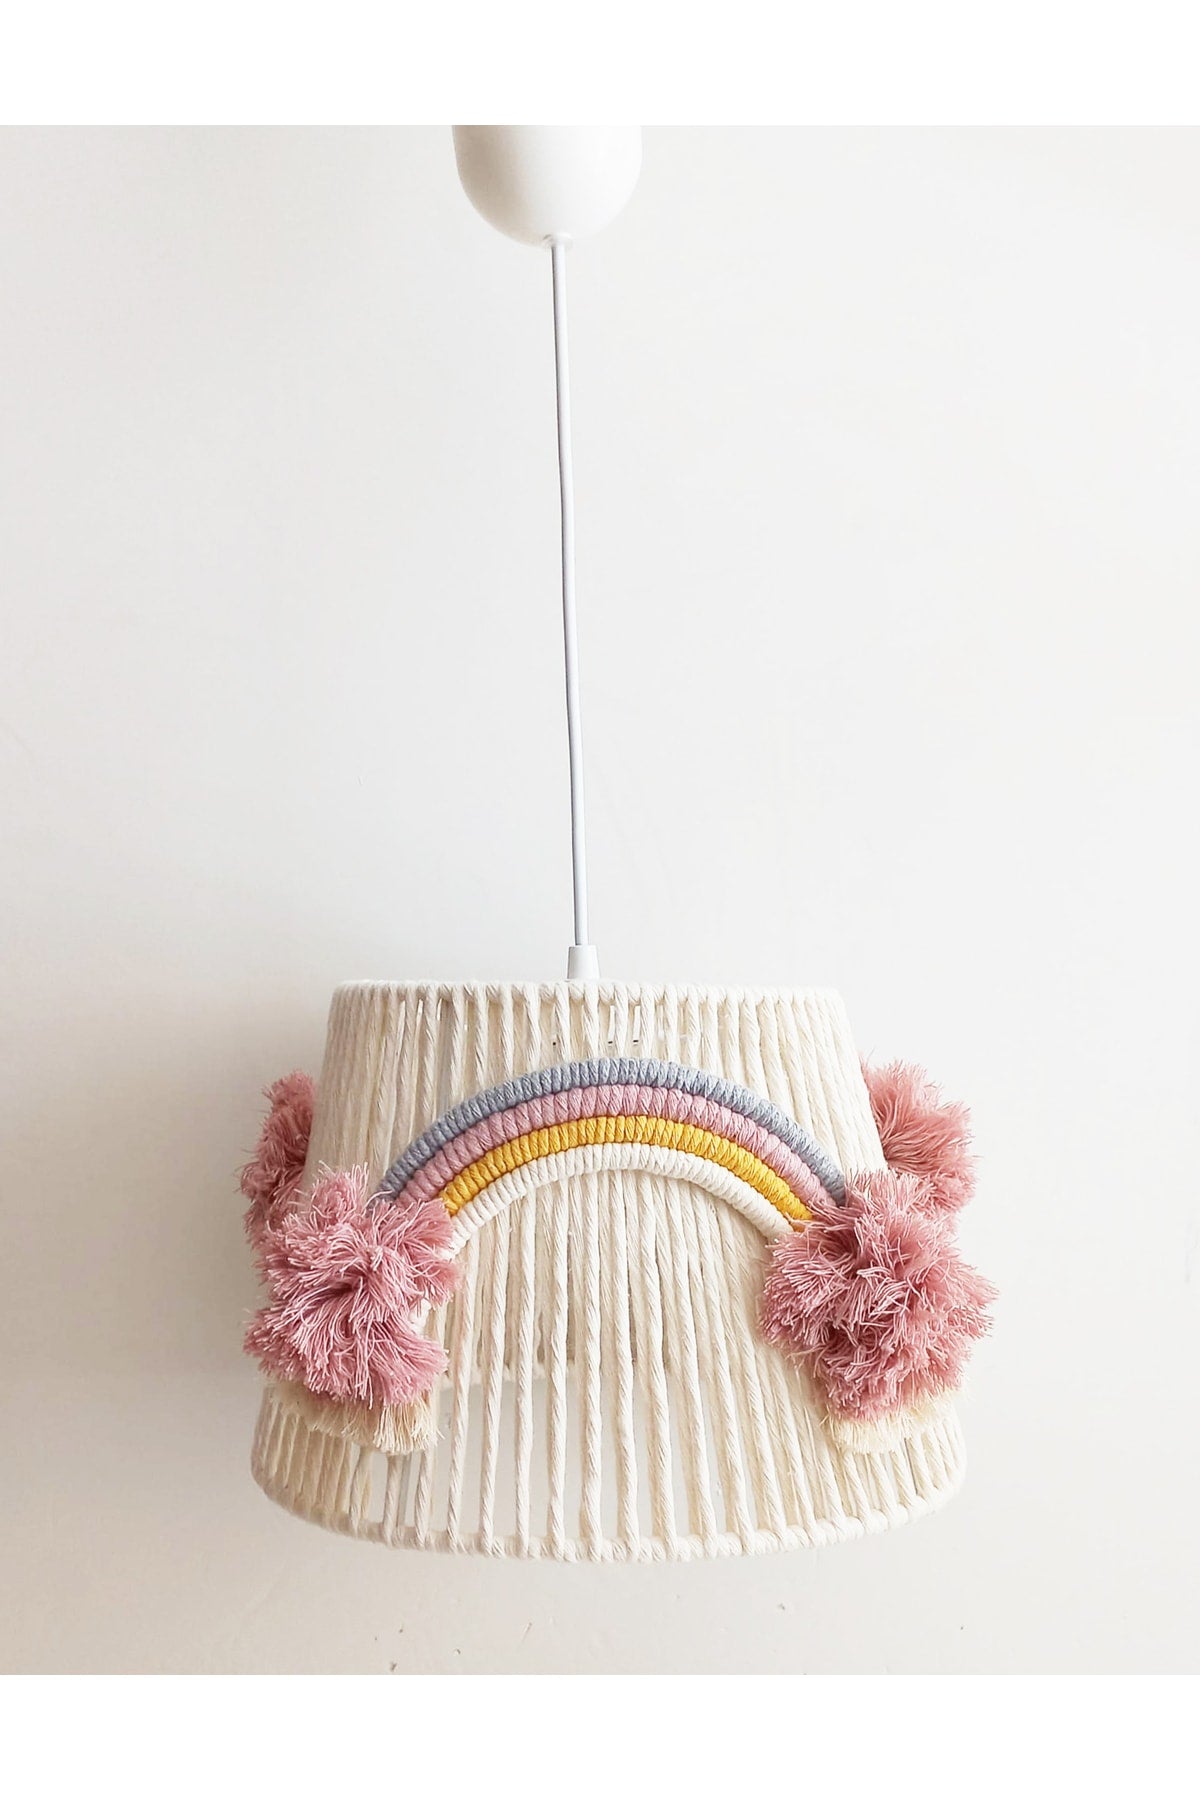 Macrame String Wrap Rainbow Appliqued Pink Handmade Pompom Baby Girl and Children's Room Chandelier (28)